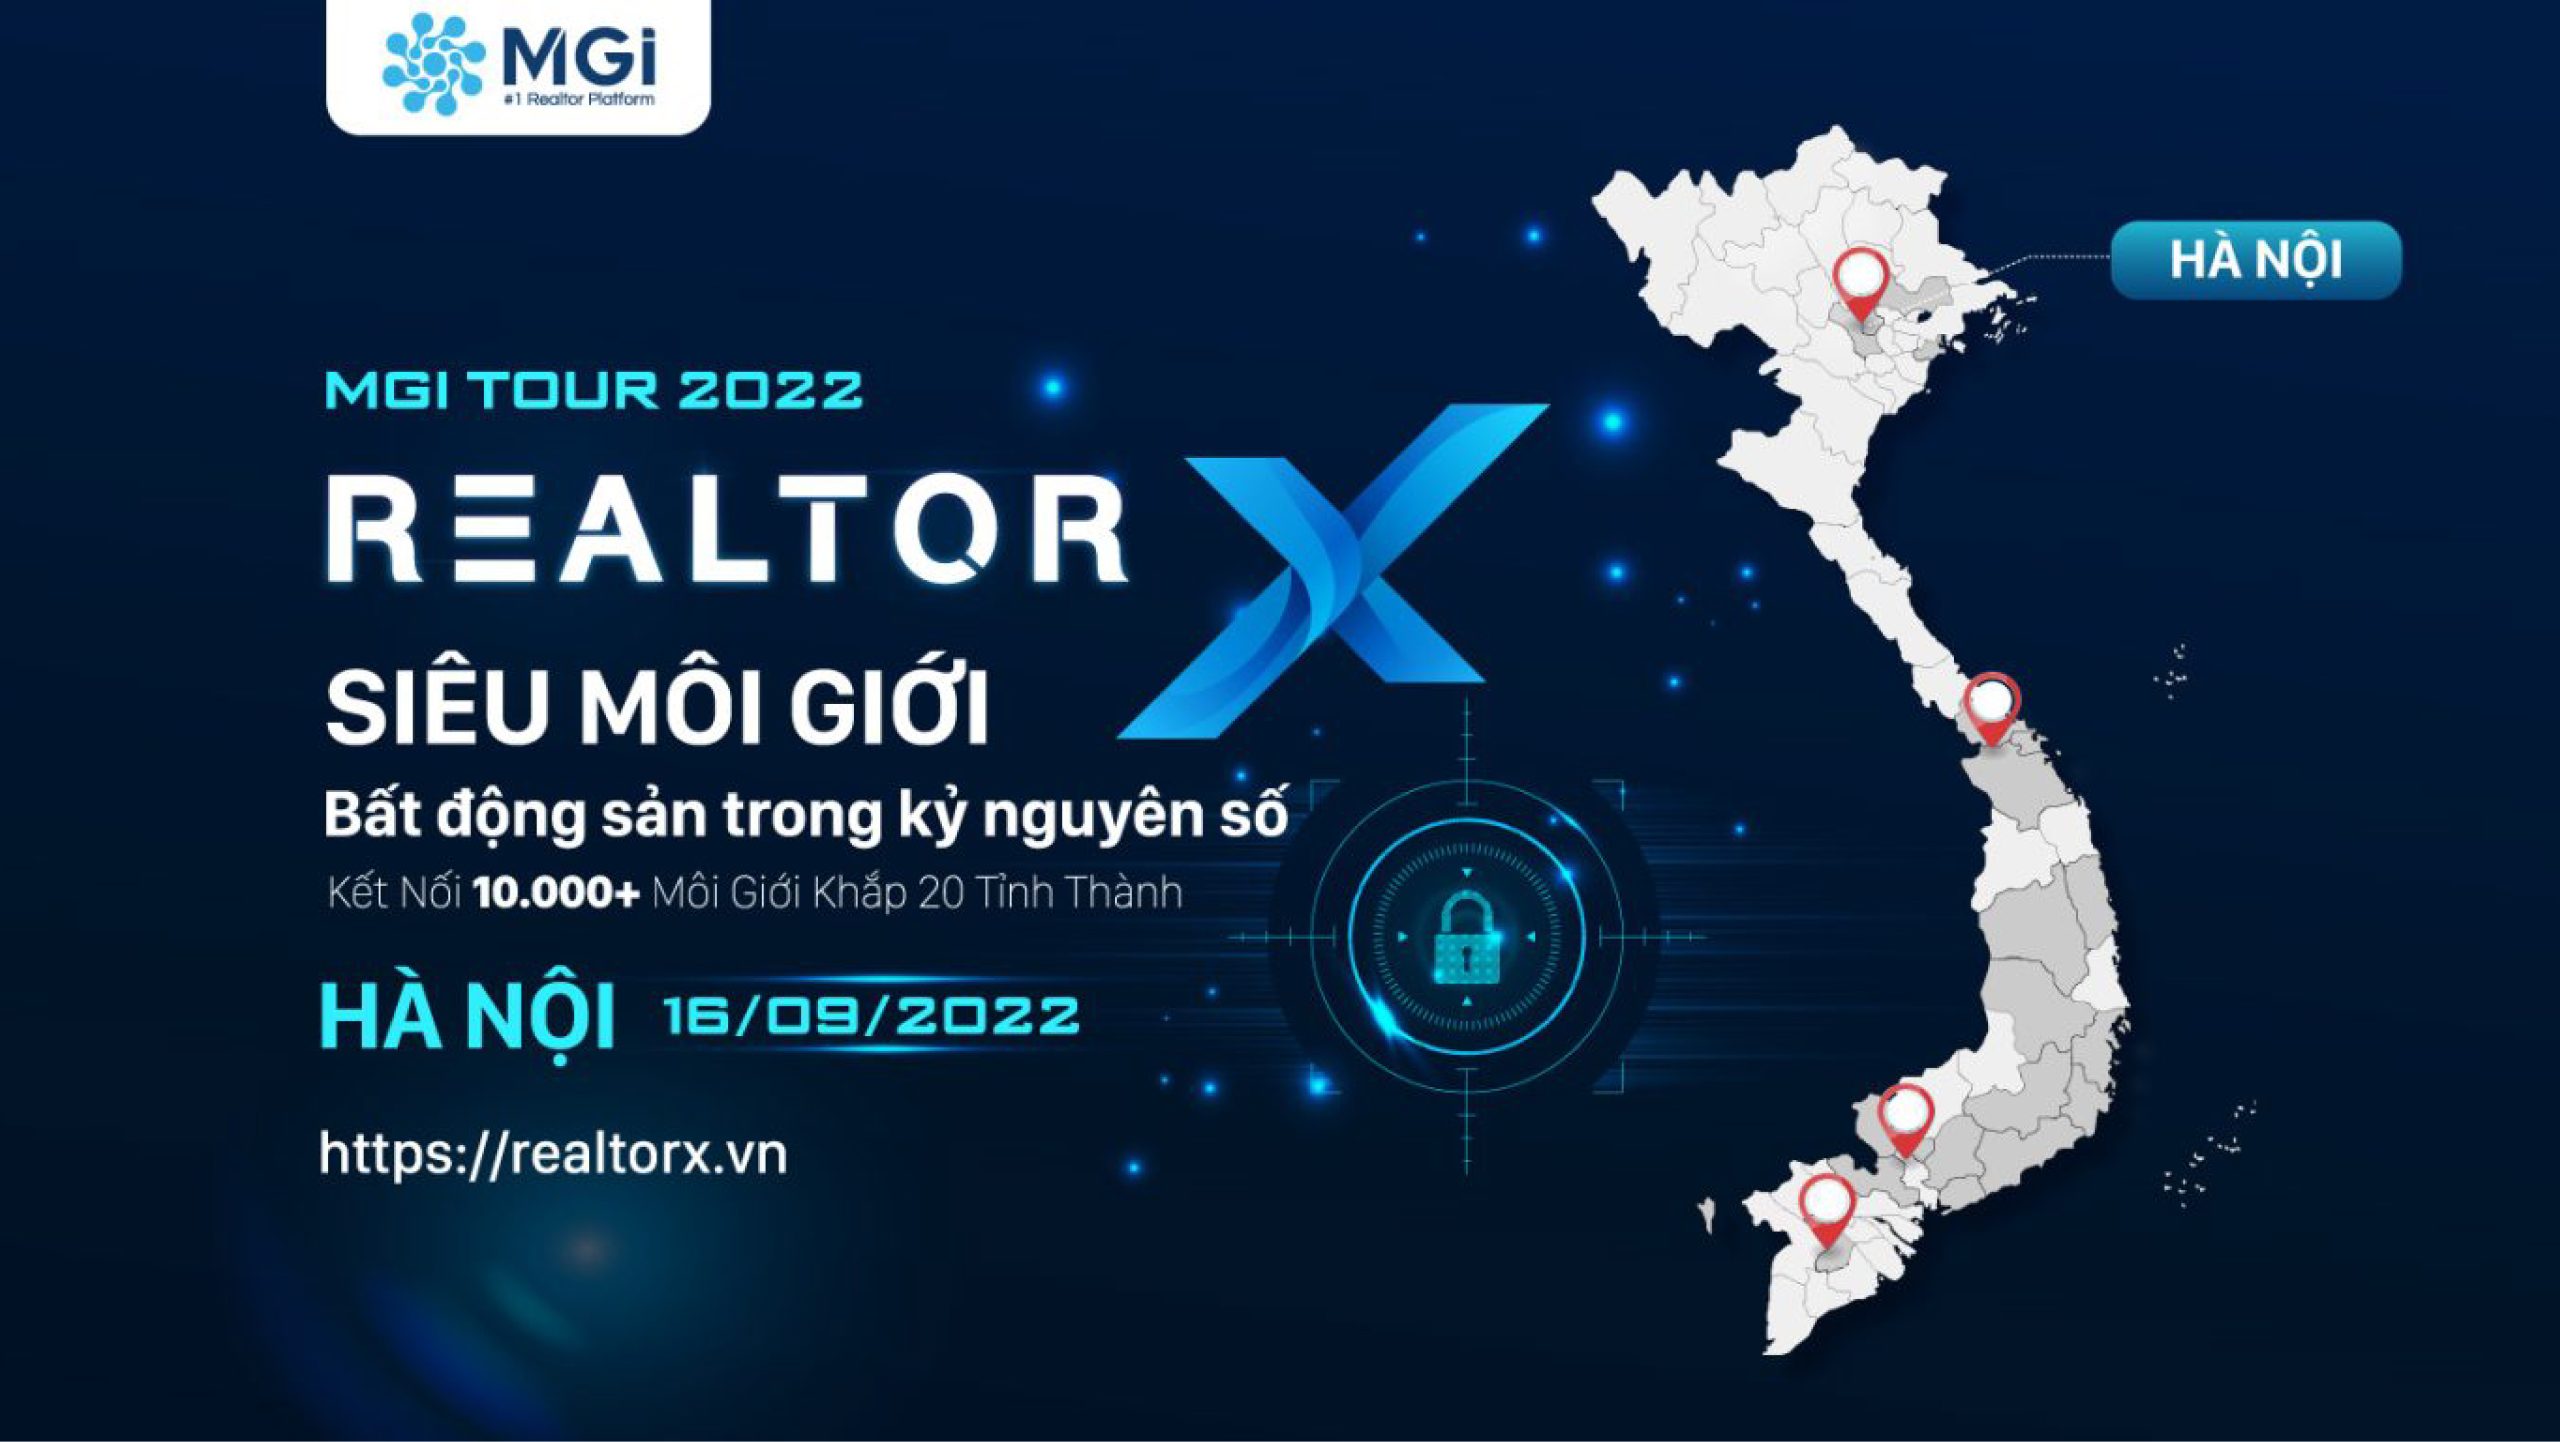 MGI REALTORX TOUR 2022 - HÀ NỘI